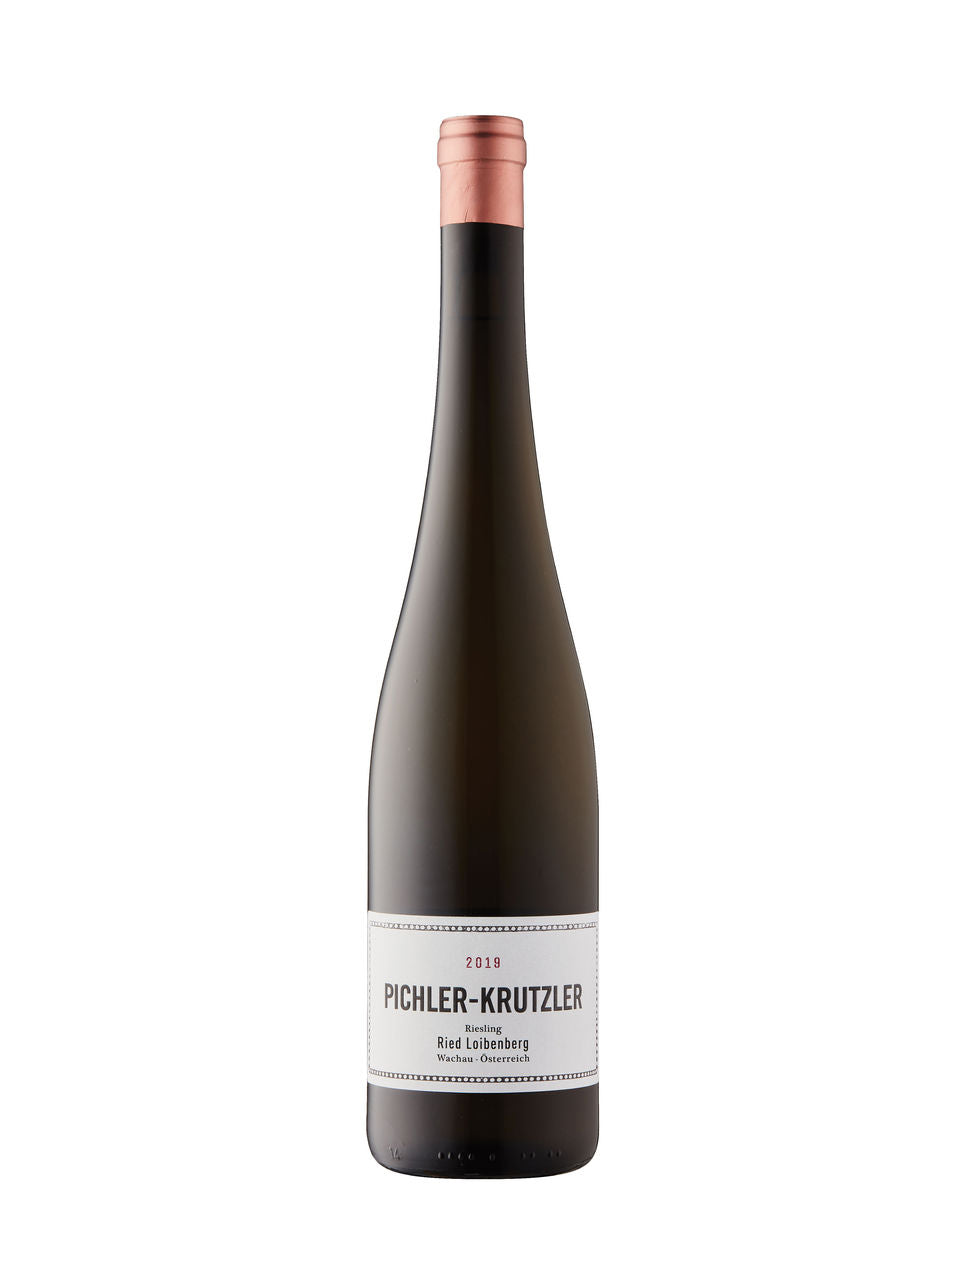 Pichler-Krutzler Ried Loibenberg Wachau Riesling 2019 750 ml bottle VINTAGES